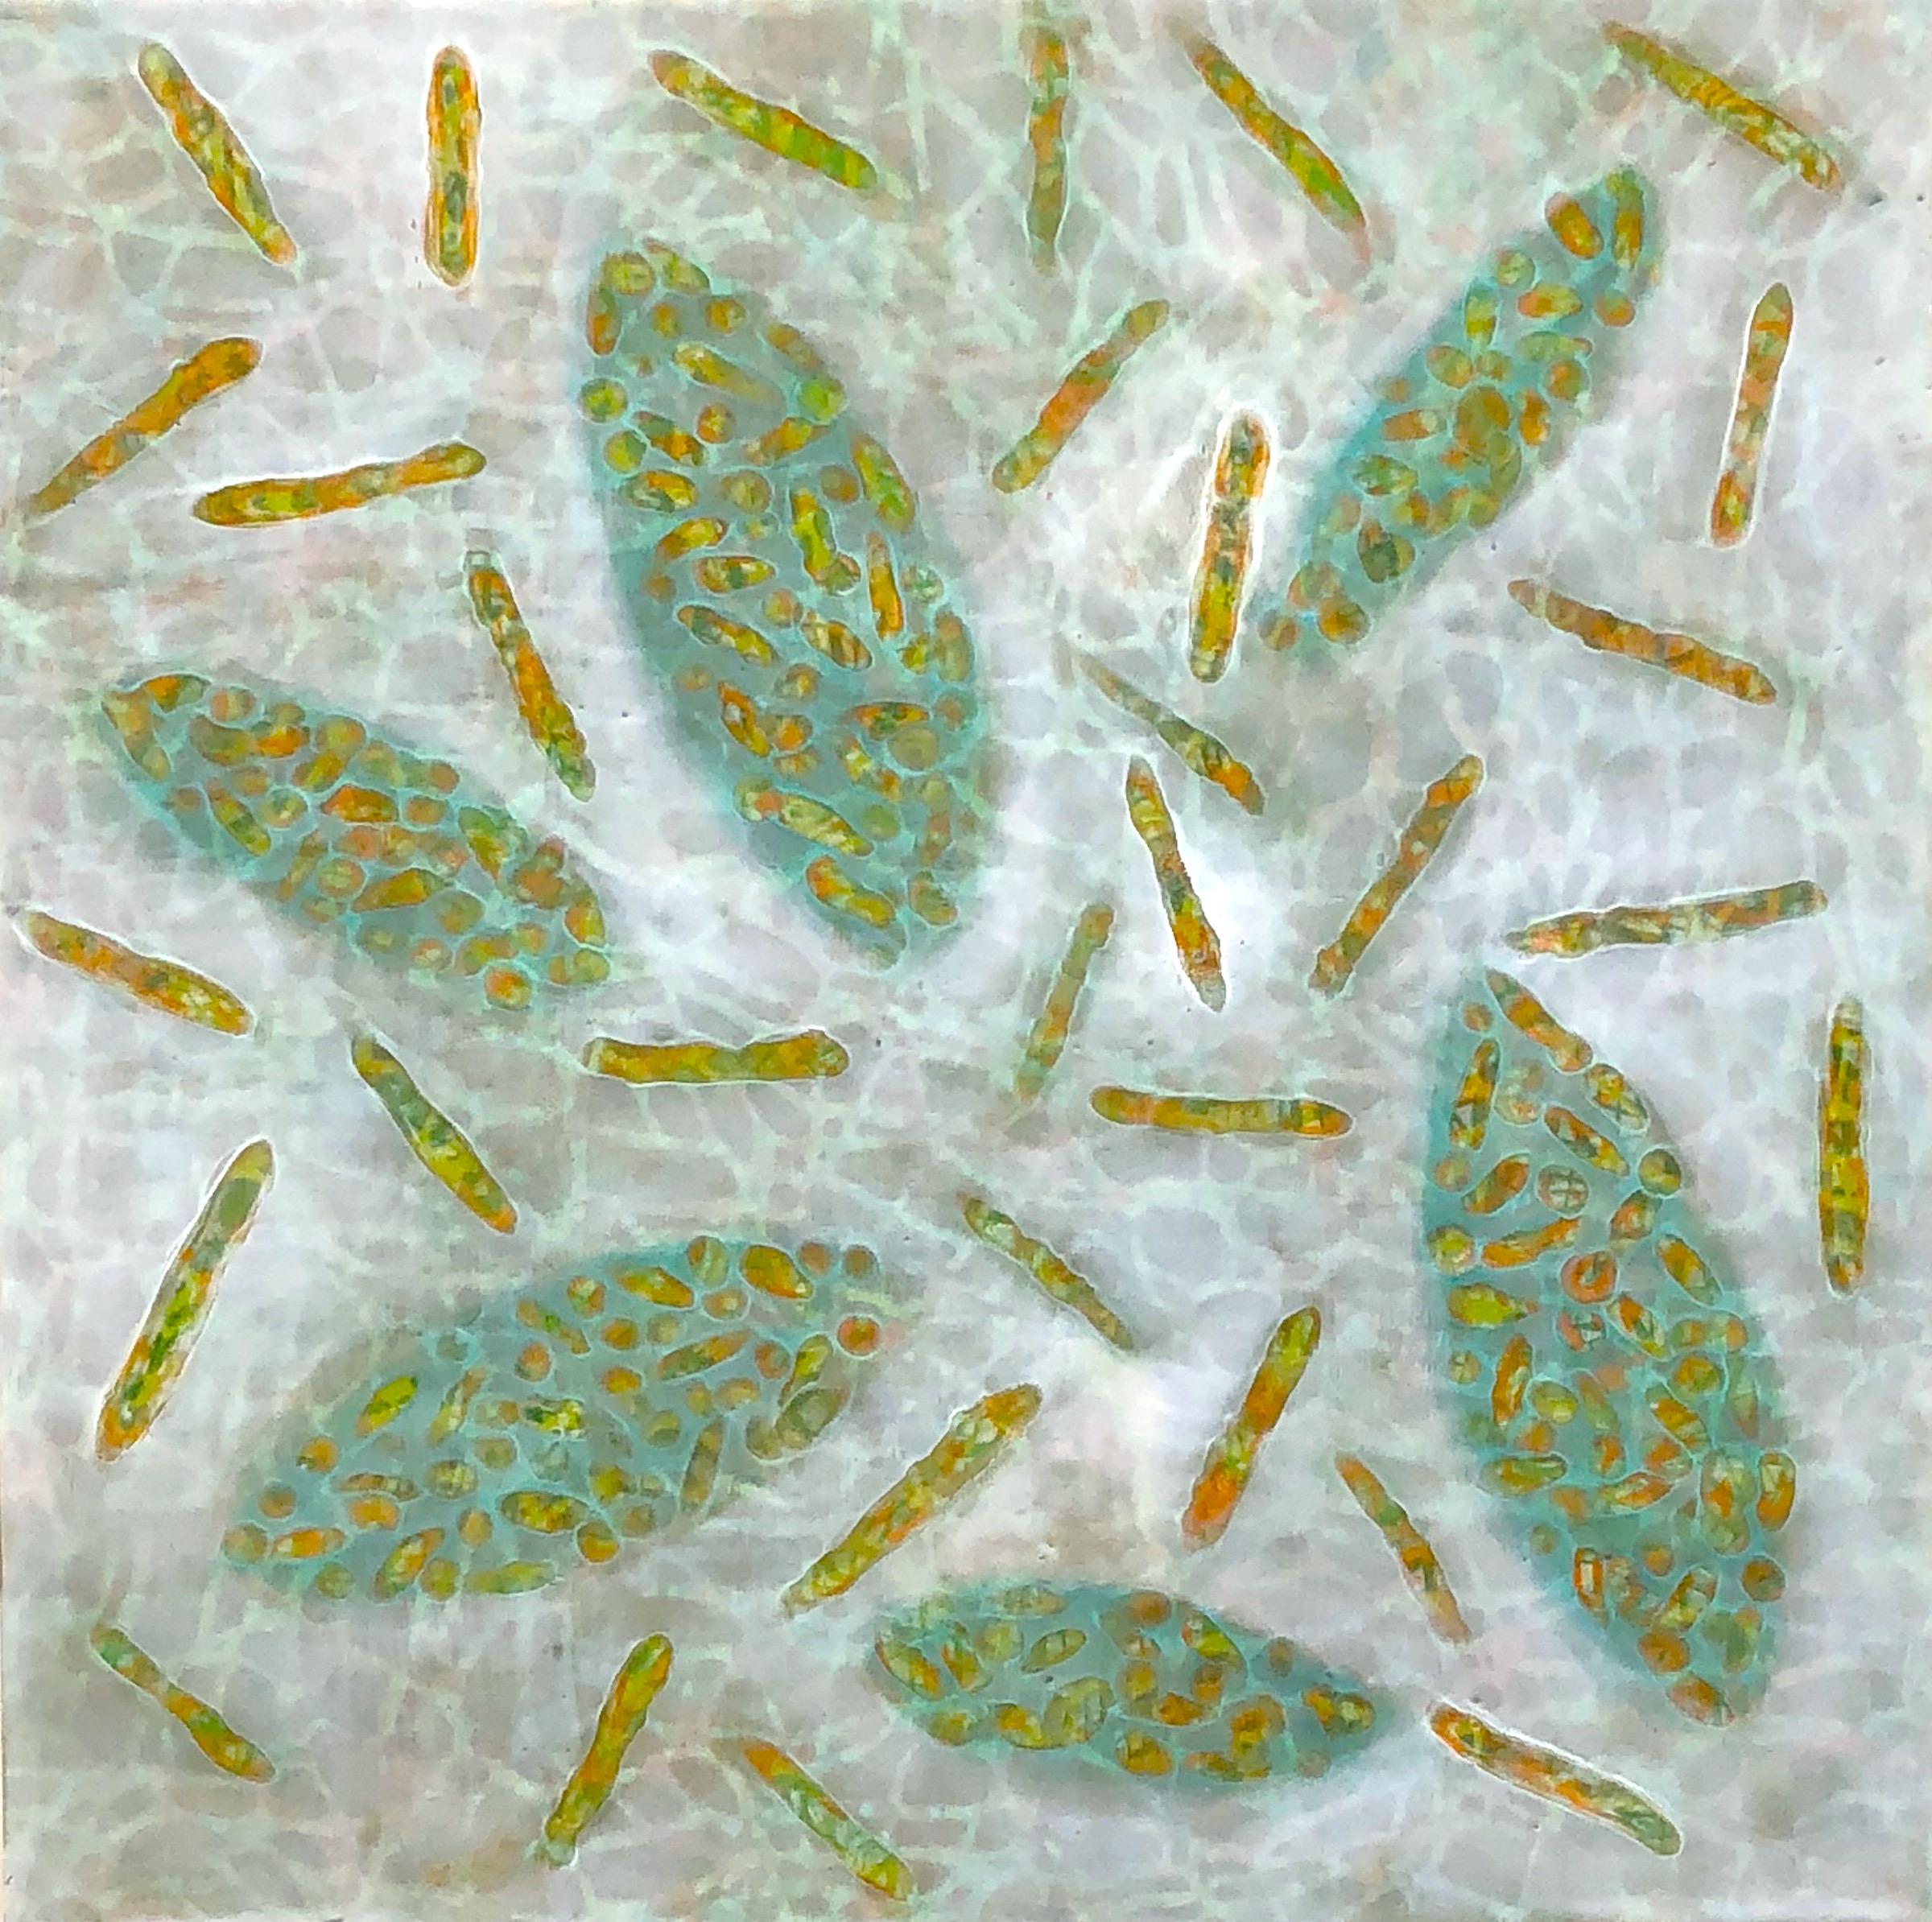 "Bio Patterns 18", abstract, microscopic, green, white, encaustic, pastel